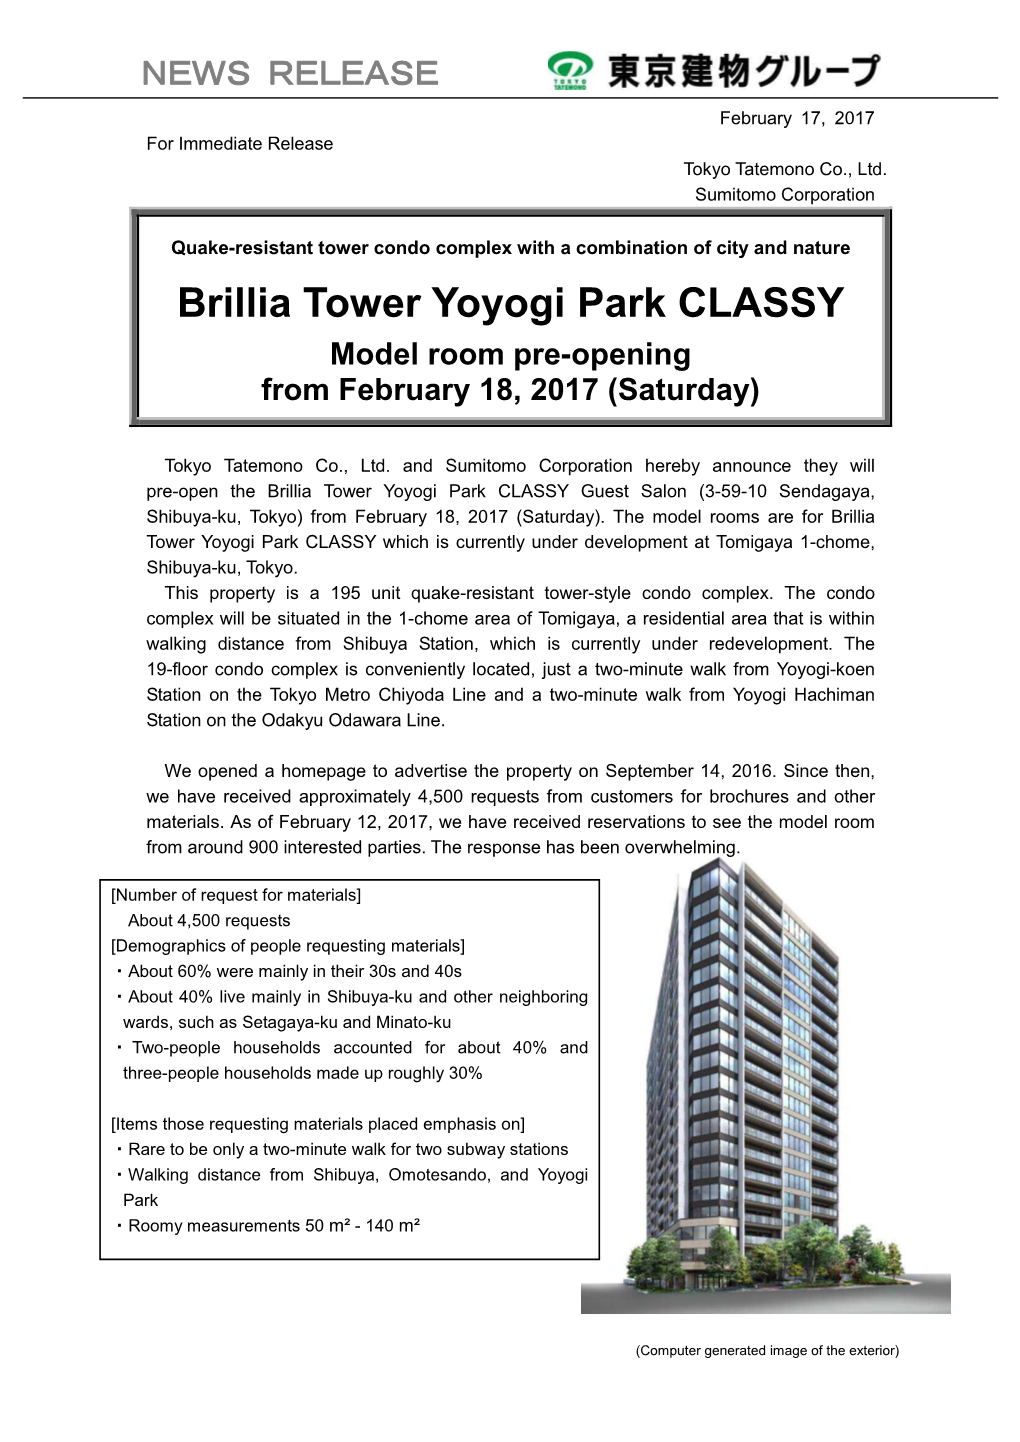 Brillia Tower Yoyogi Park CLASSY Model Room Pre-Opening from February 18, 2017 (Saturday)